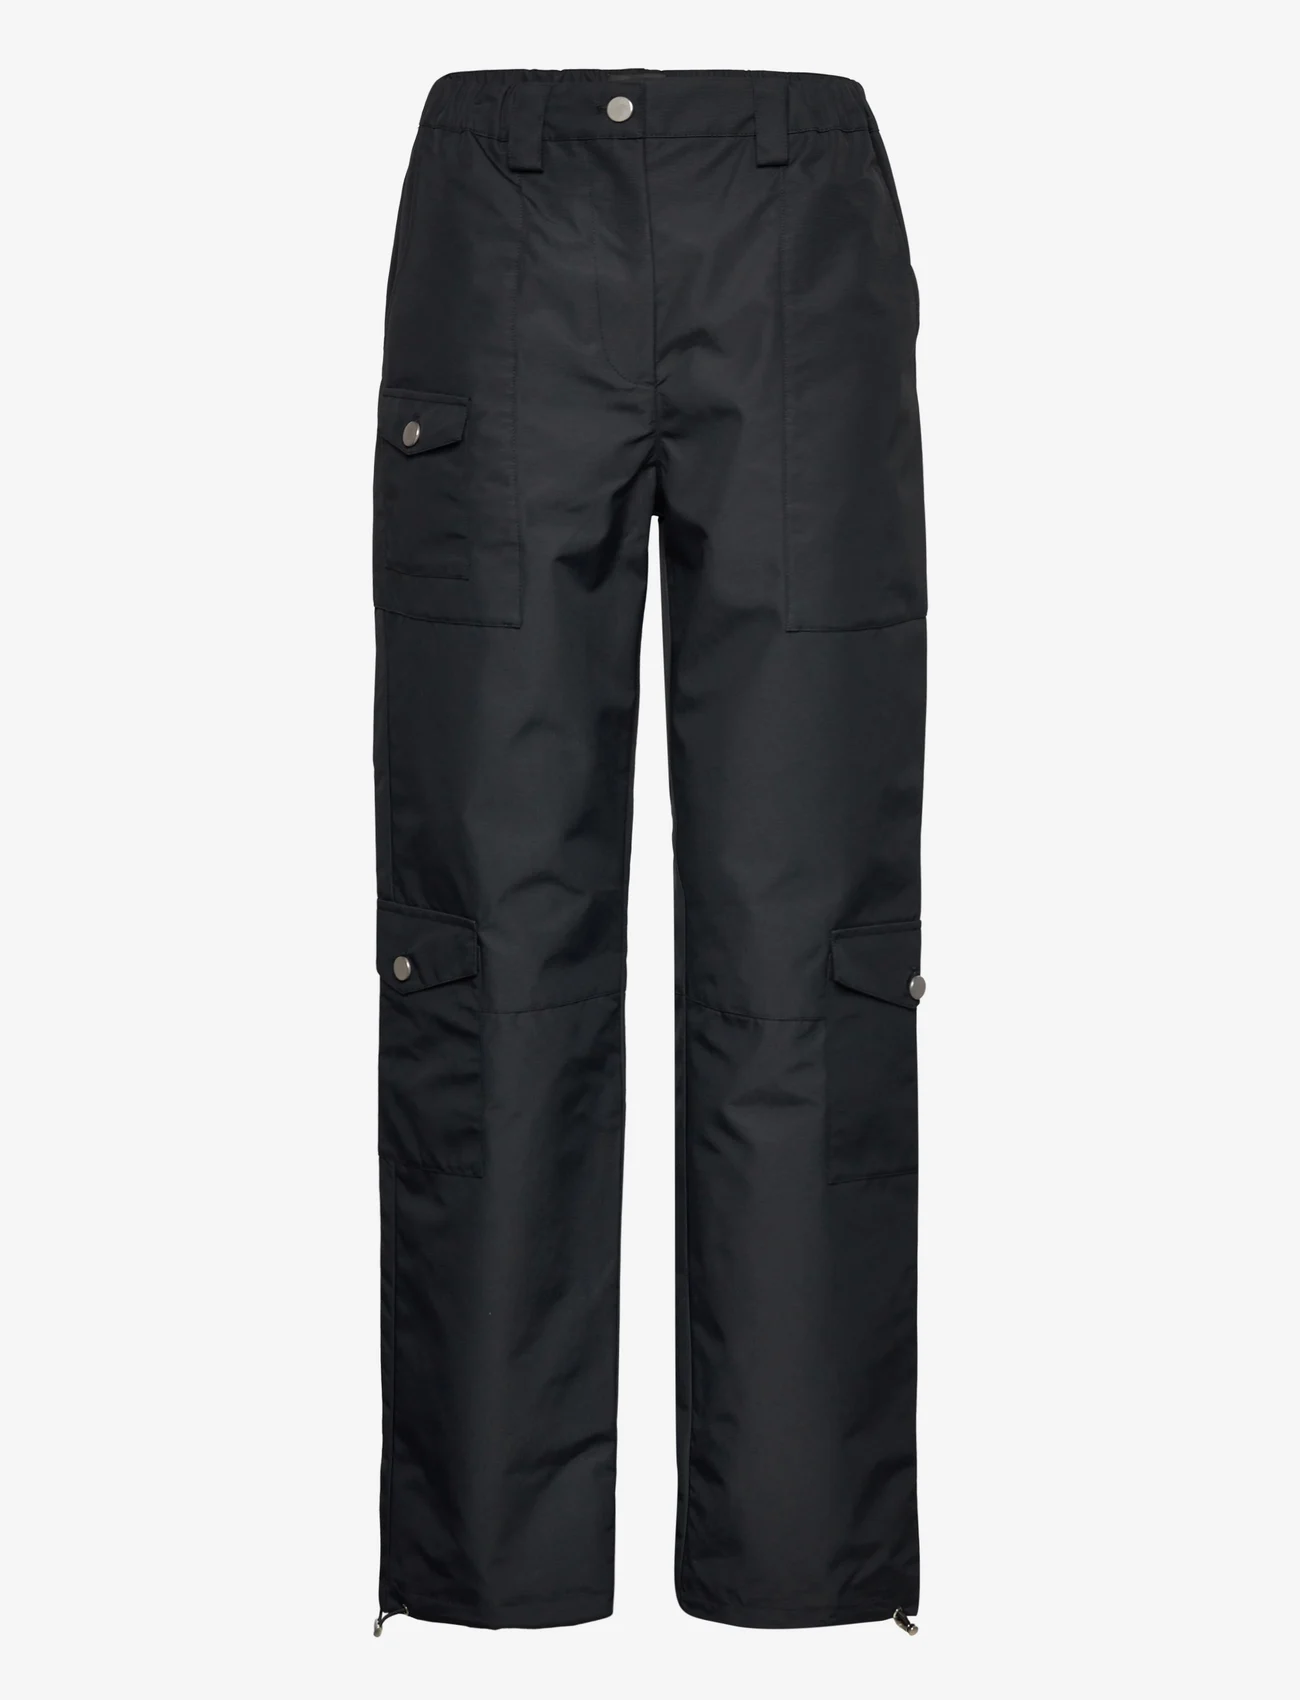 HAN Kjøbenhavn - Nylon Cargo Trousers - pantalon cargo - black - 0